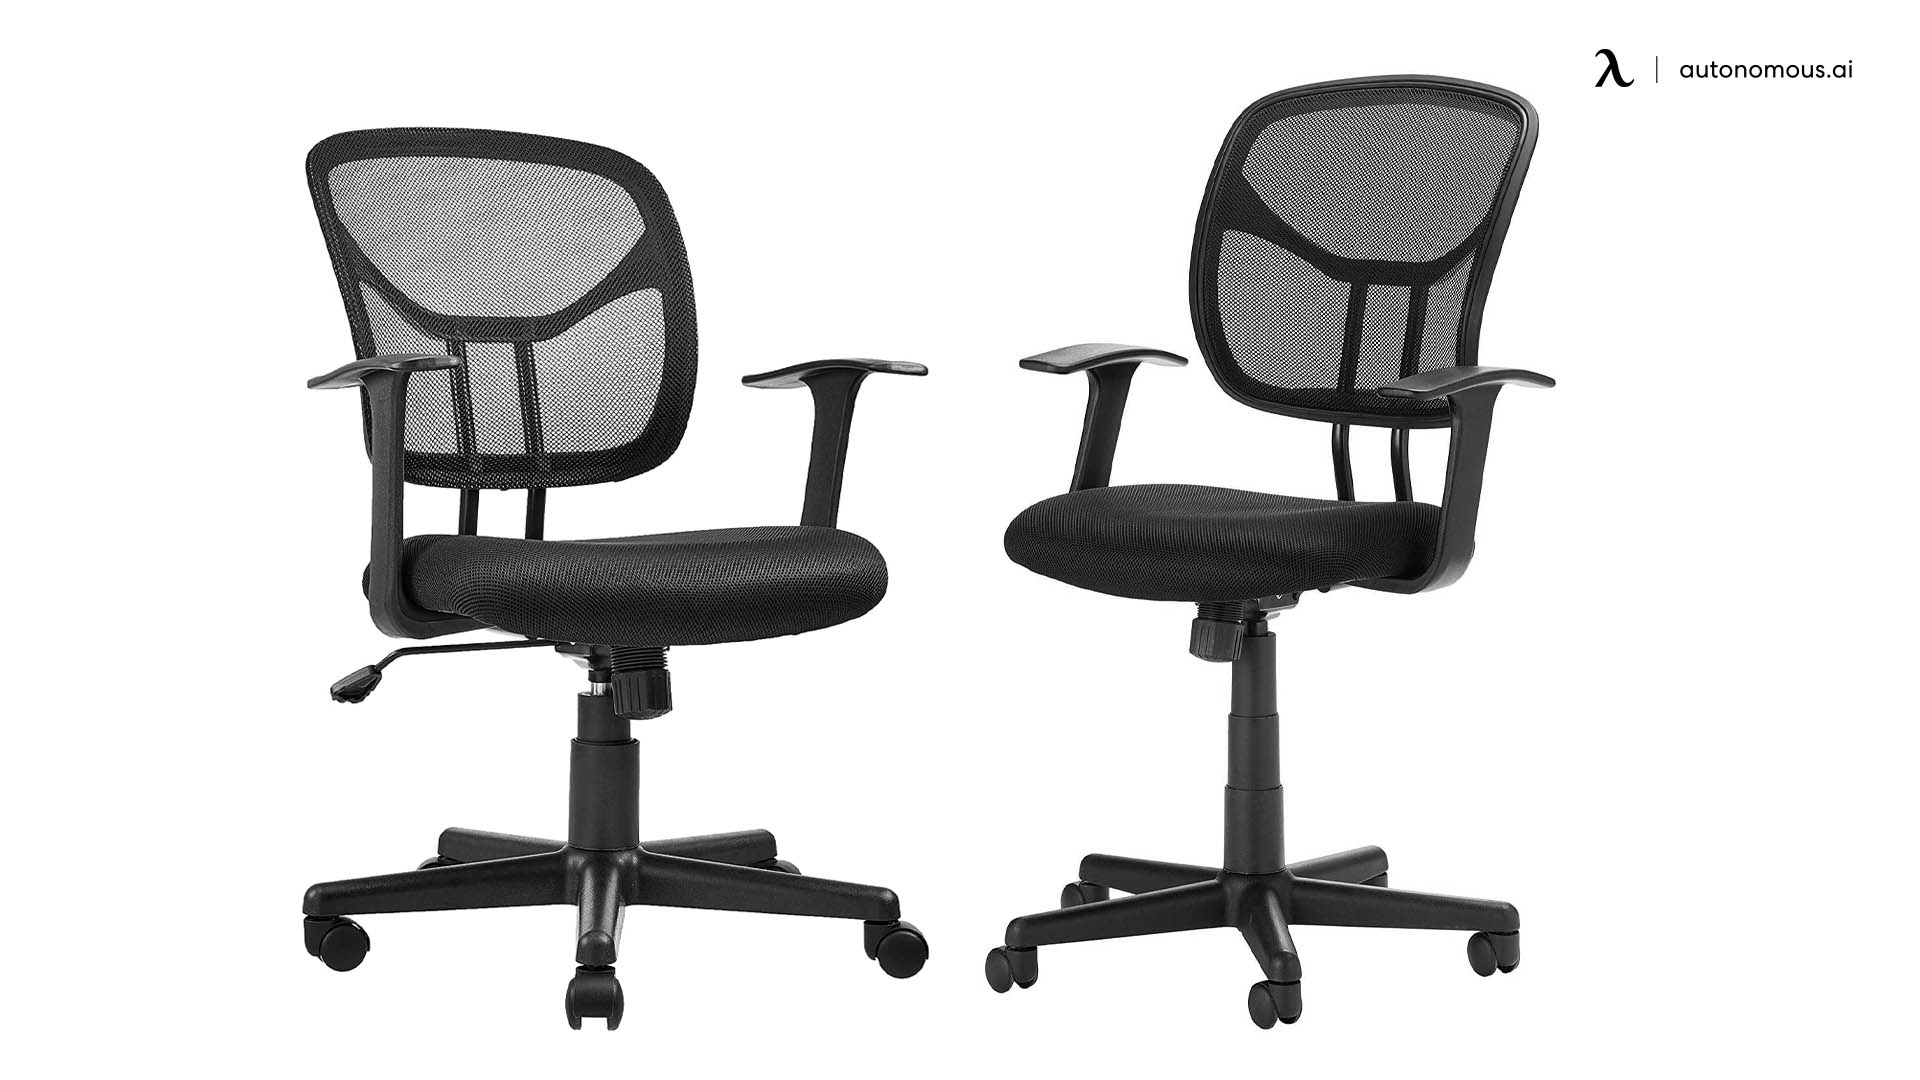 AmazonBasics Office Chair